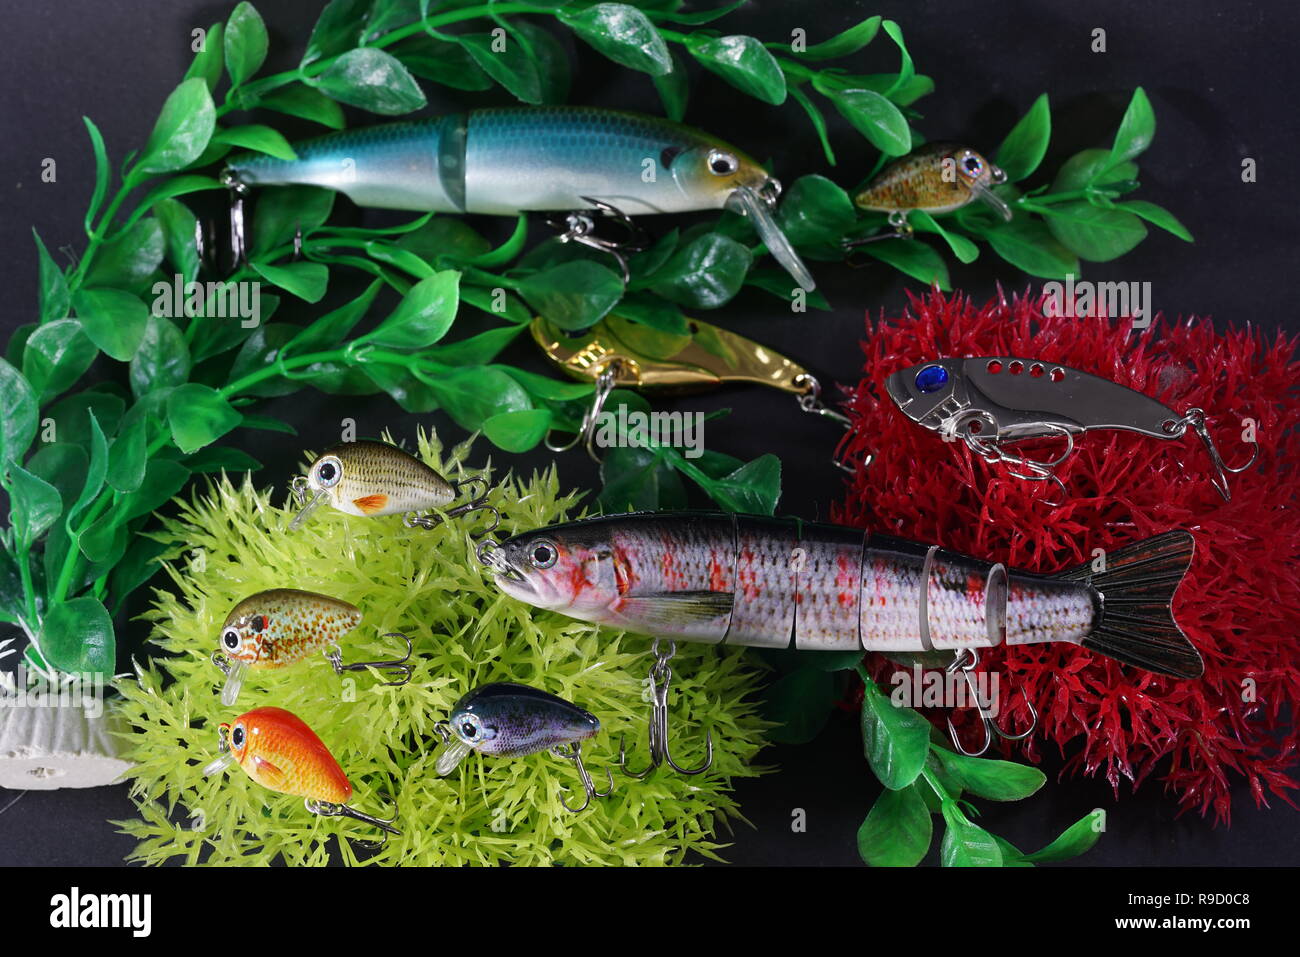 https://c8.alamy.com/comp/R9D0C8/artificial-aquarium-with-artificial-fish-that-are-good-for-fishing-for-predator-fish-R9D0C8.jpg